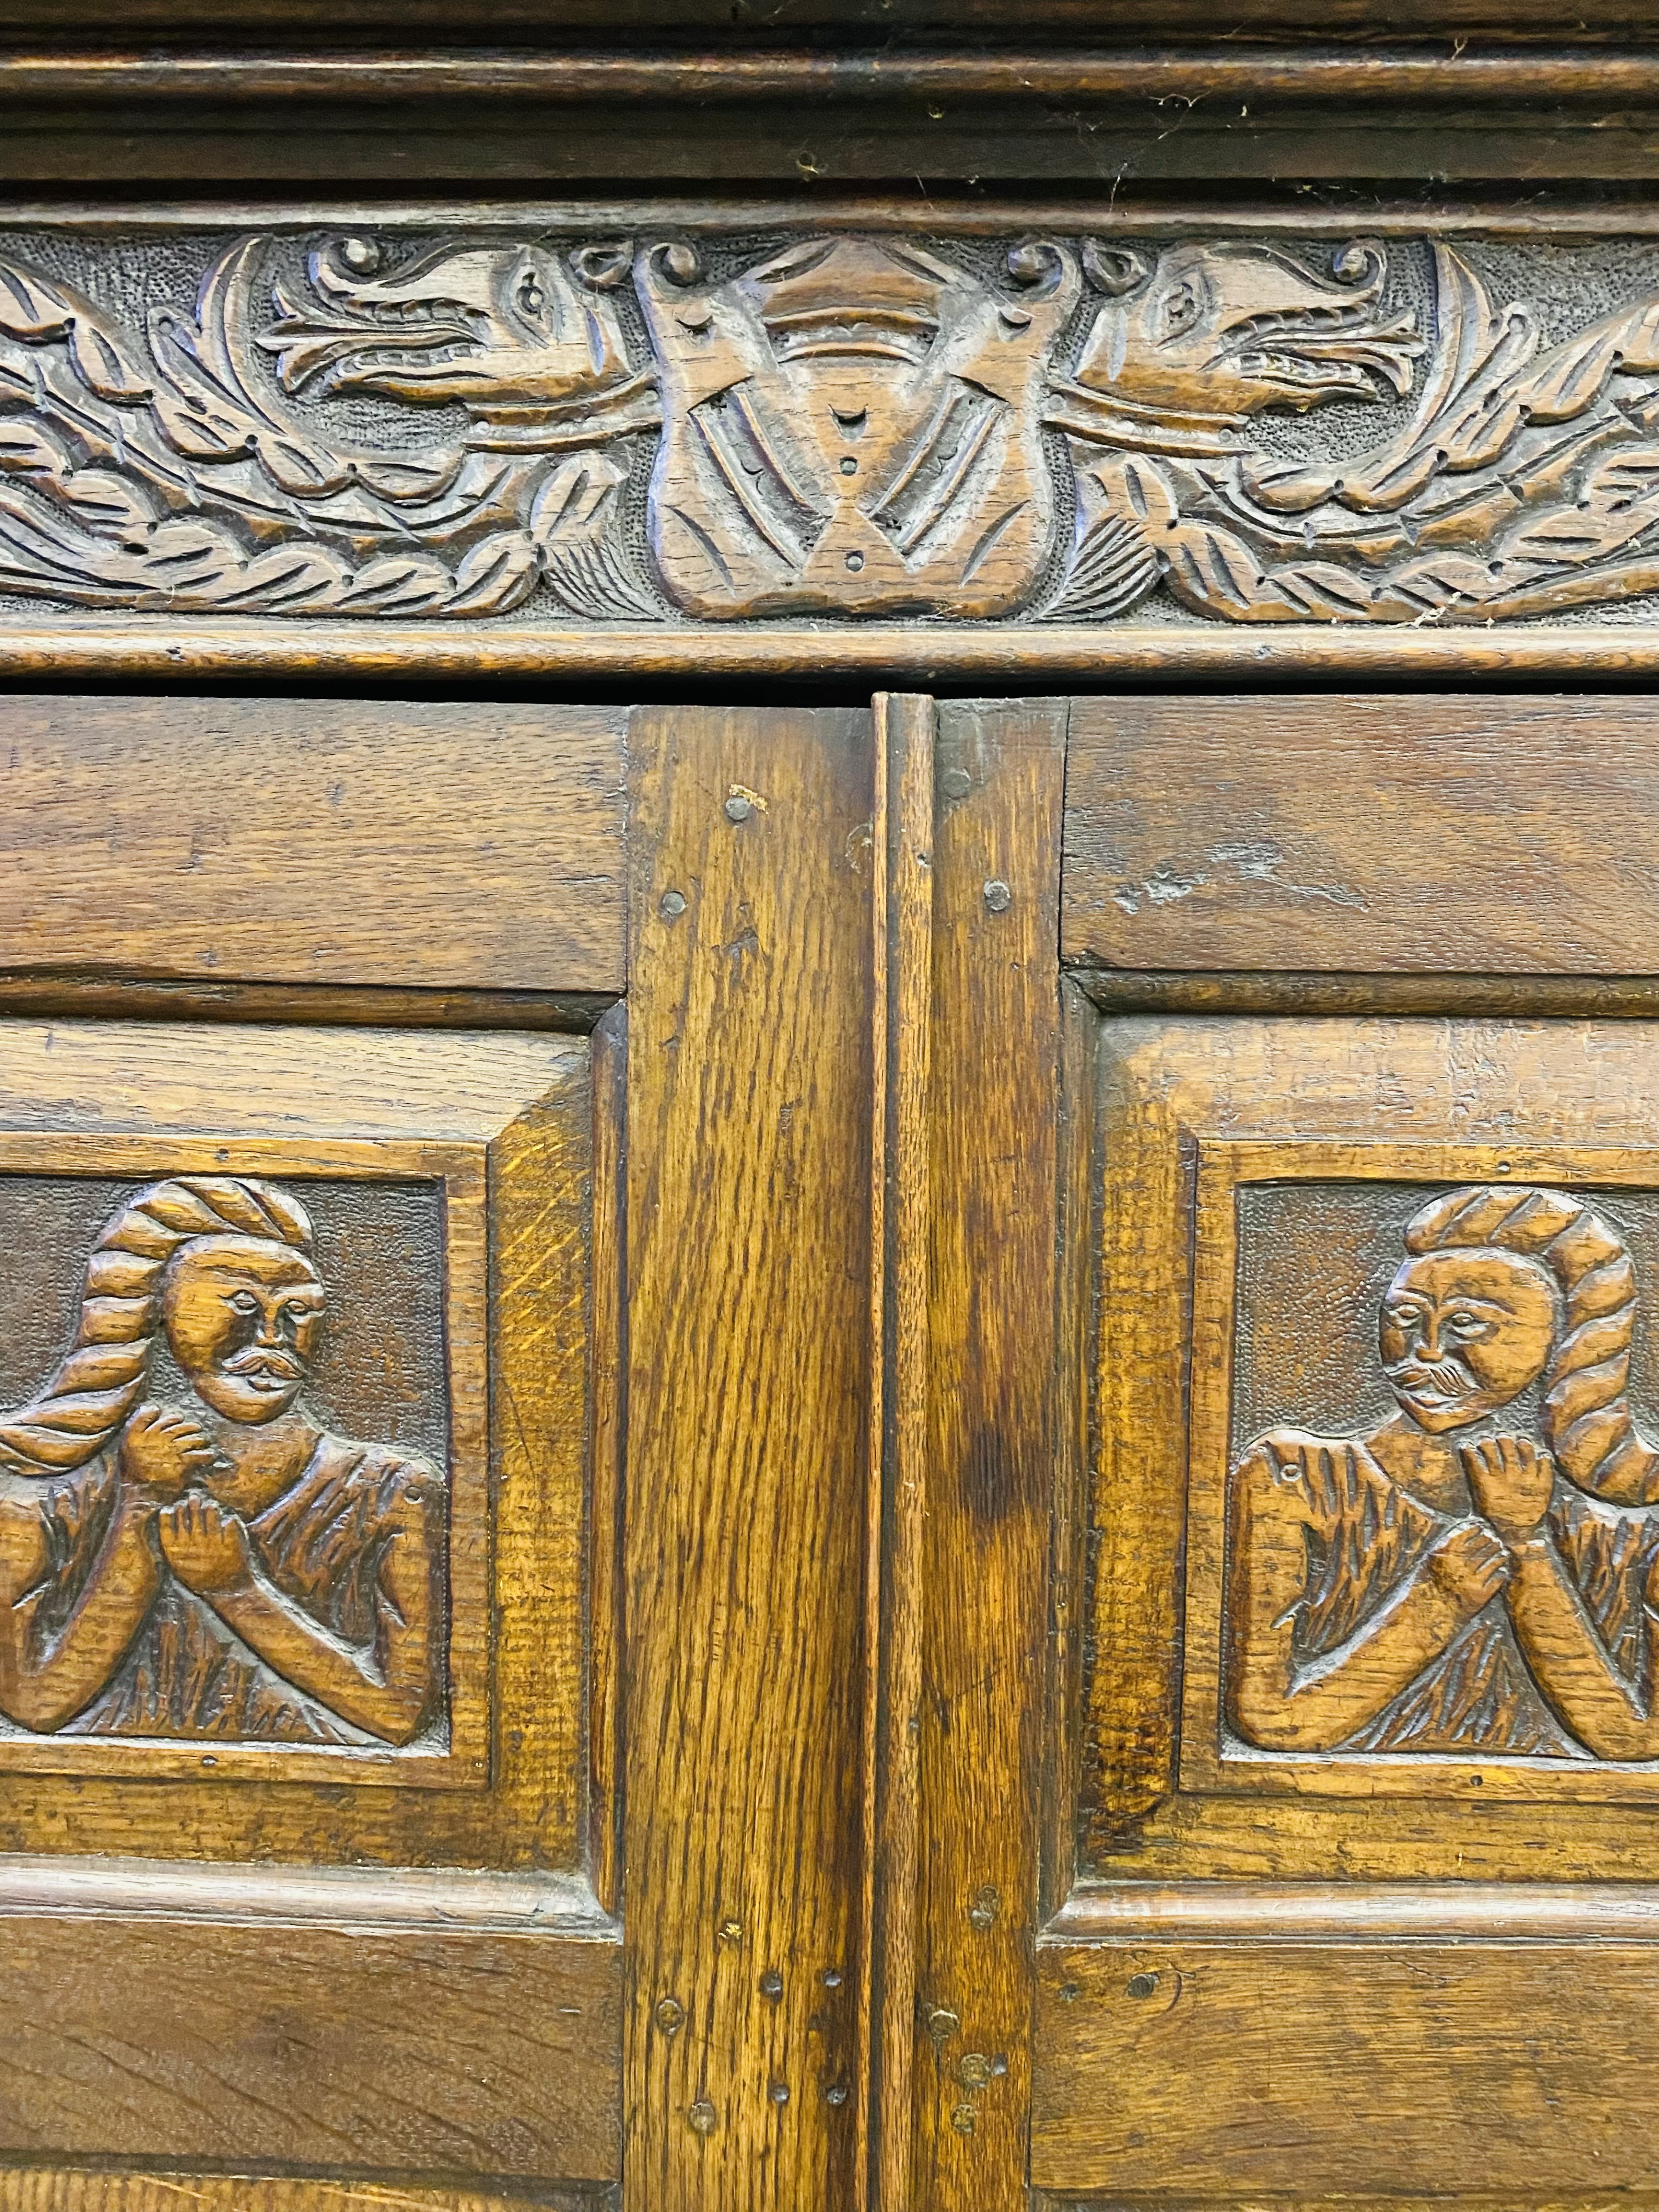 18th century continental oak clerks desk - Image 7 of 8